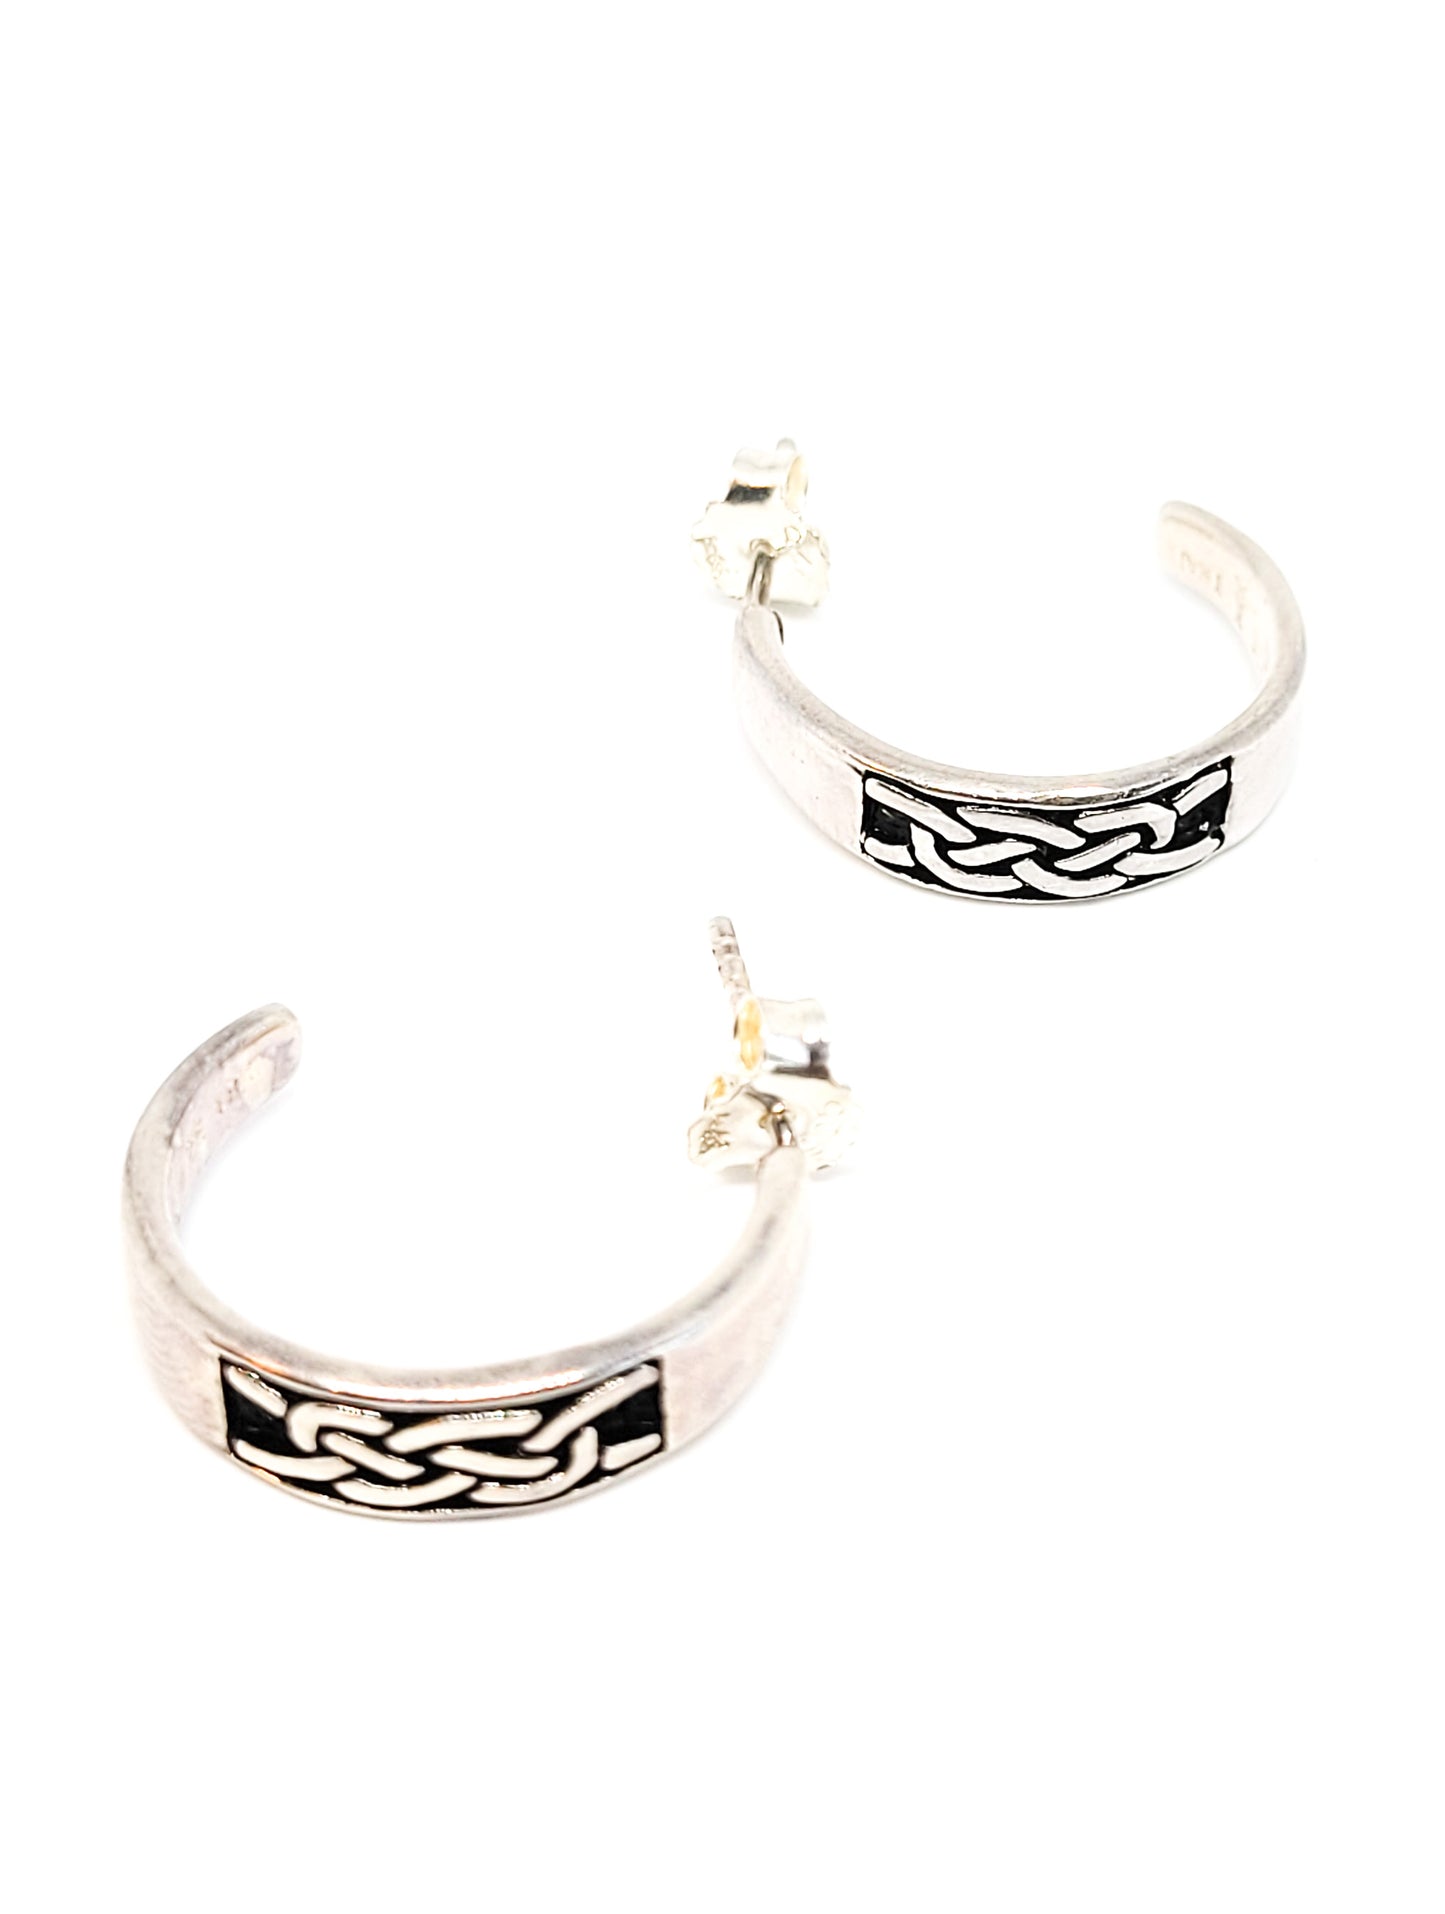 Celtic Trinity knot black enamel sterling silver vintage hoop earrings signed 925